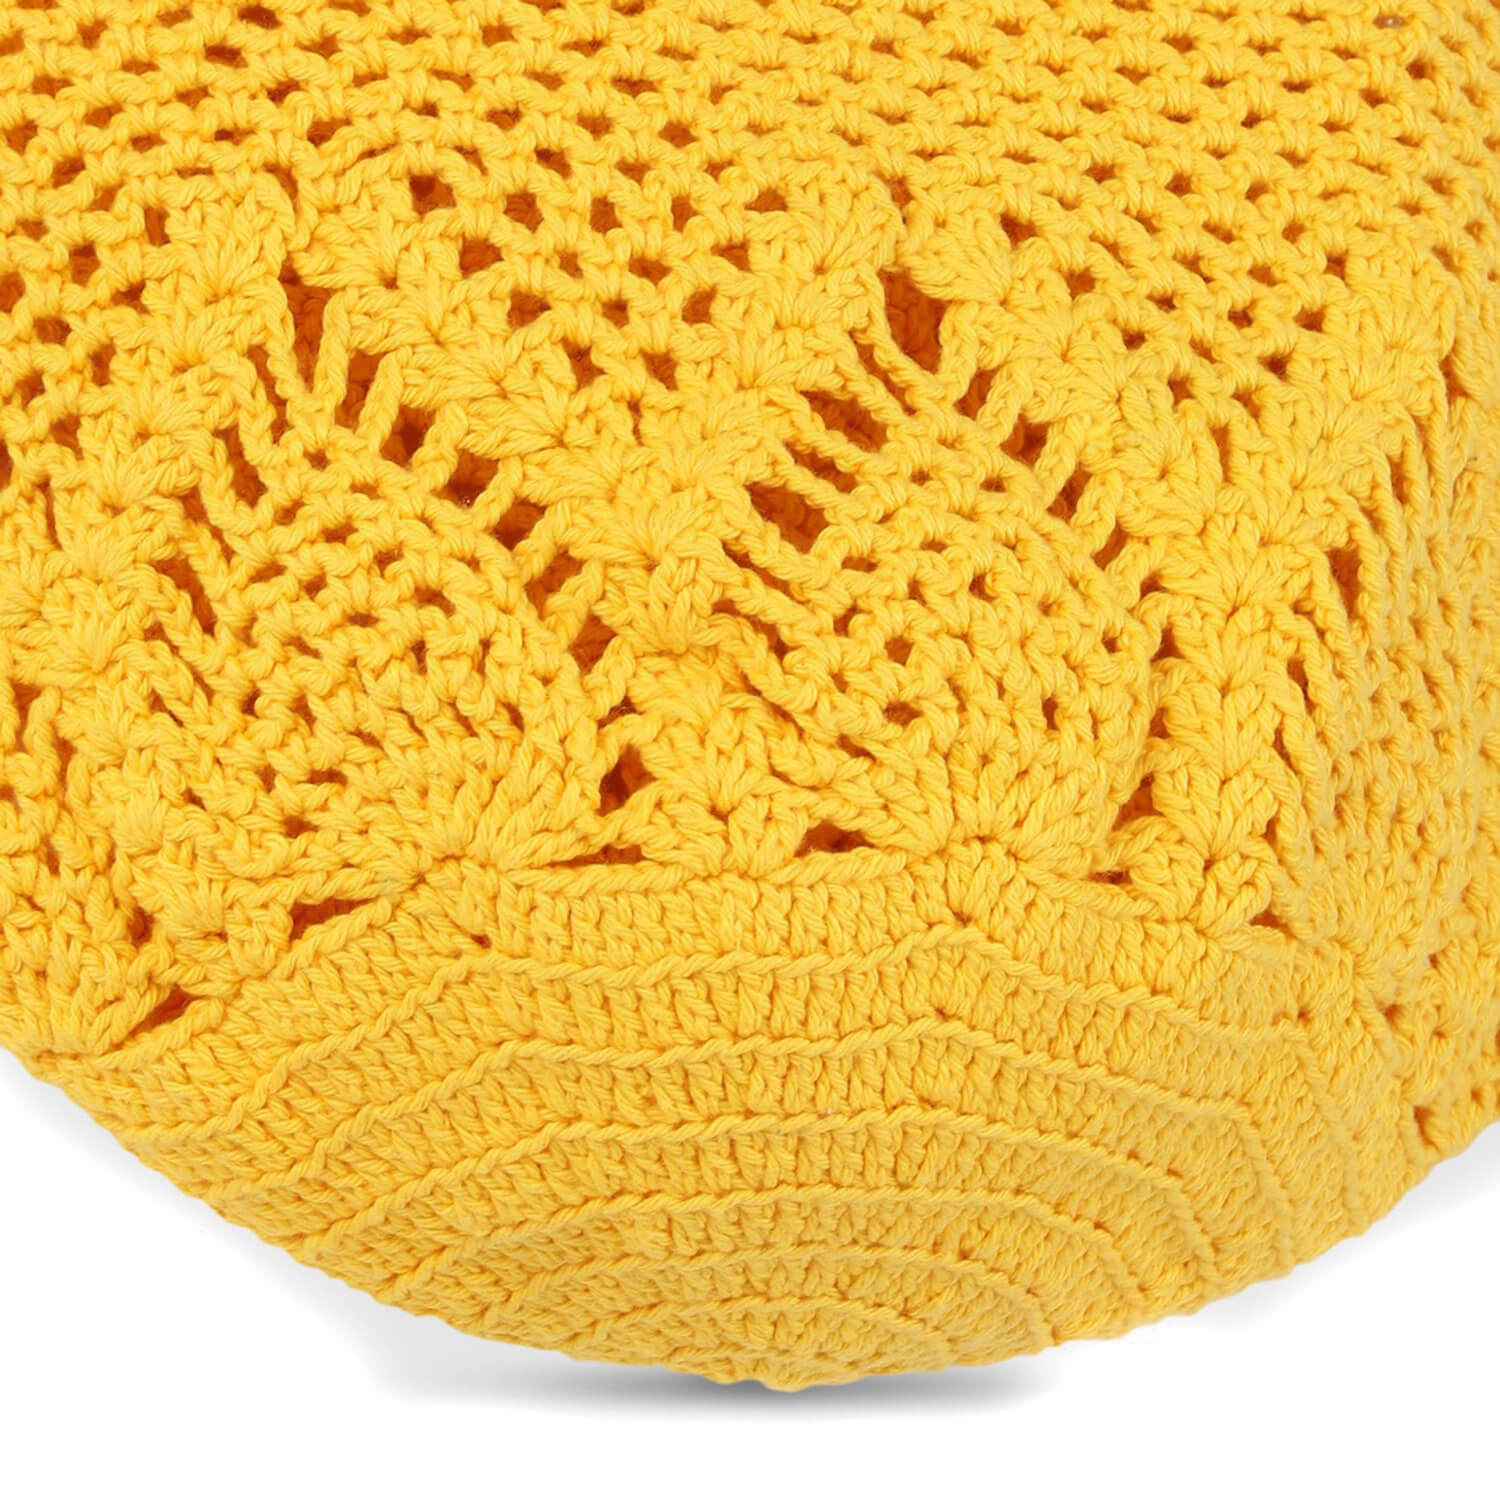 Handmade Crochet Market Bag - Yellow 2692